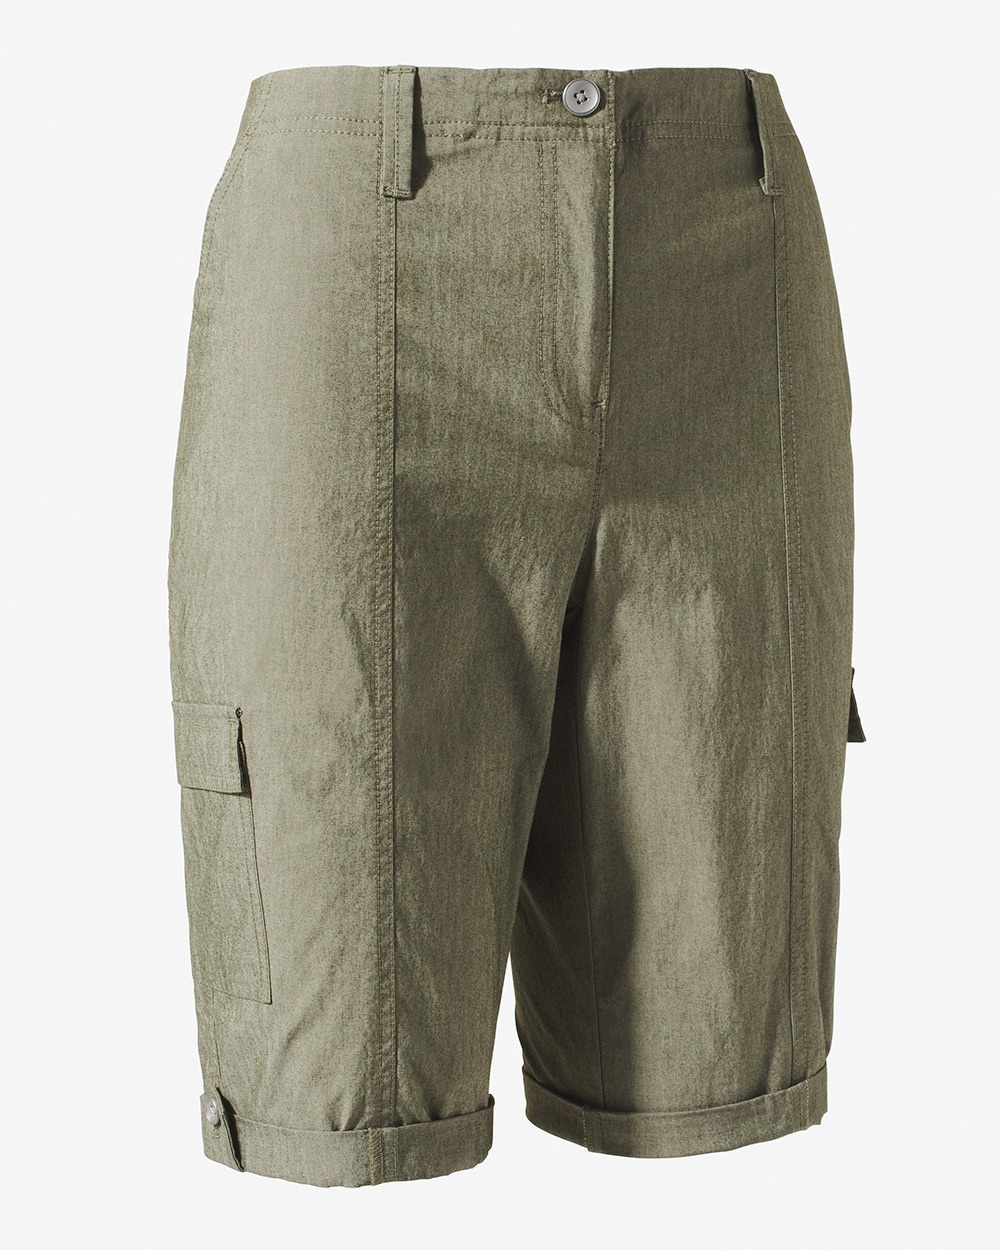 Fitigue Comfort Waist Shorts